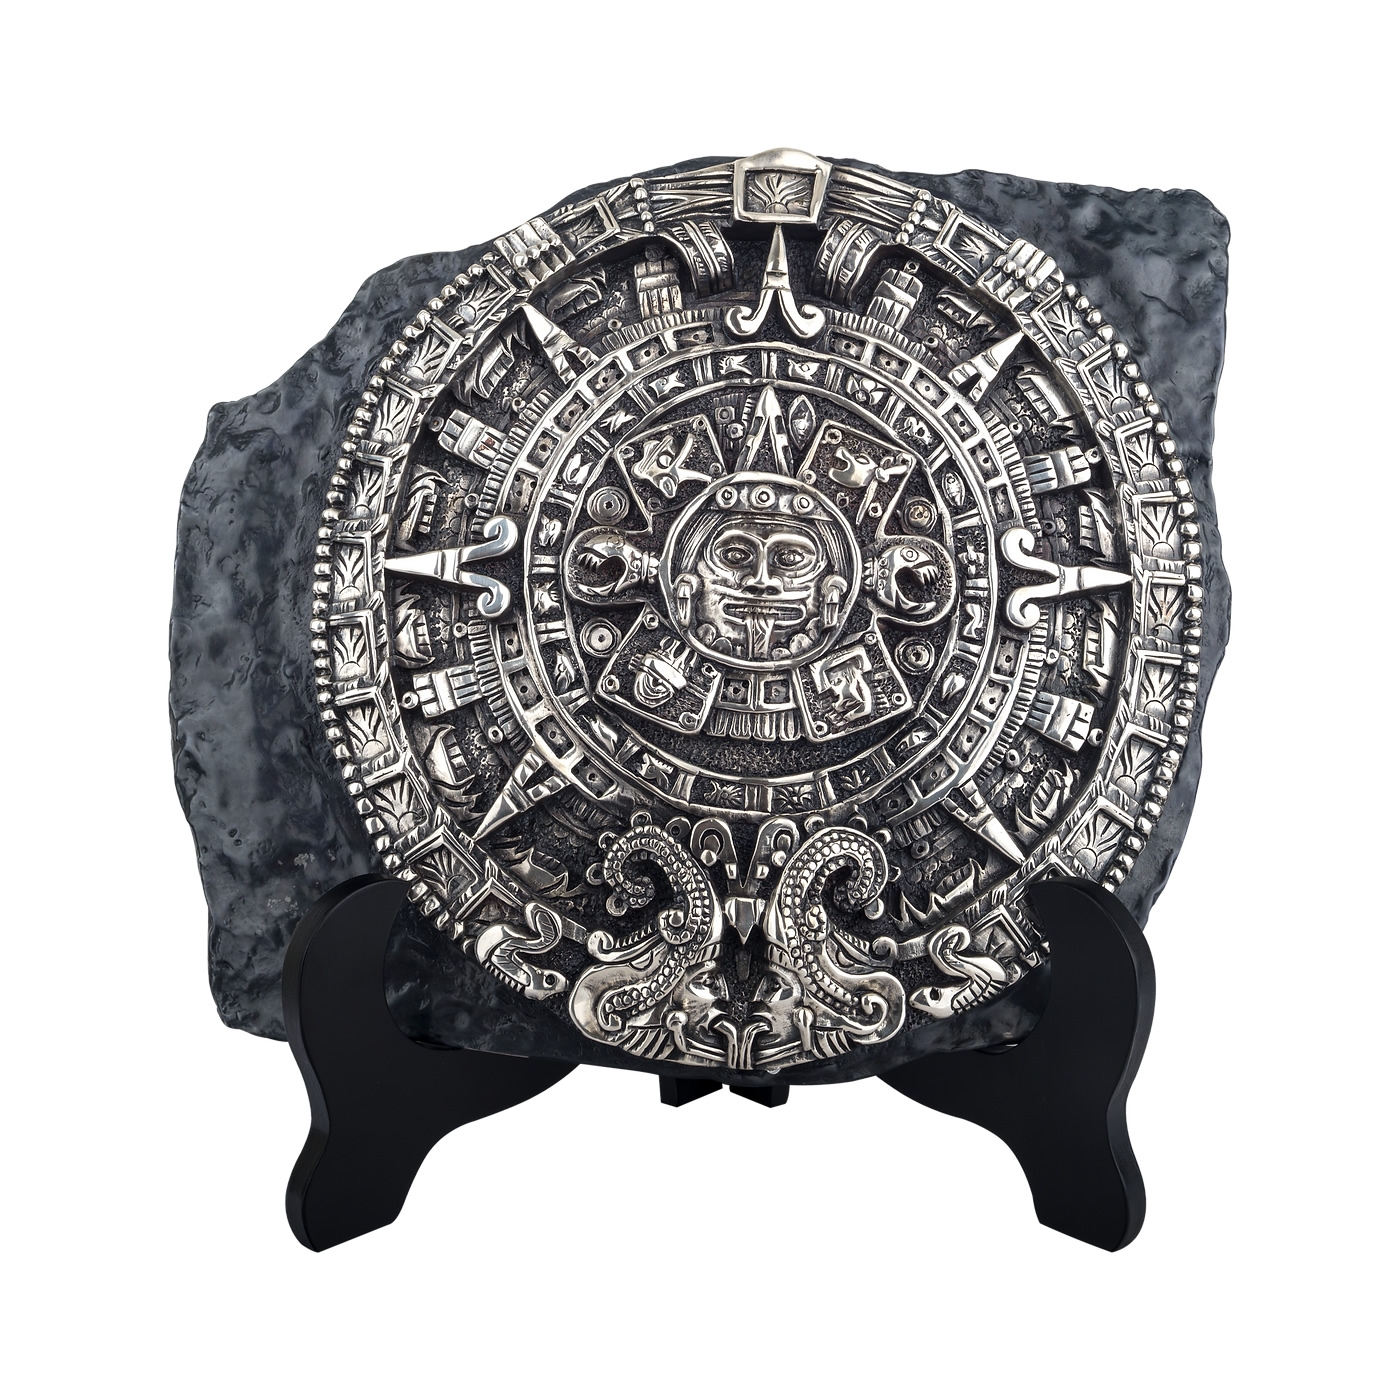 Aztec Calendar Replica Relief Sculpture